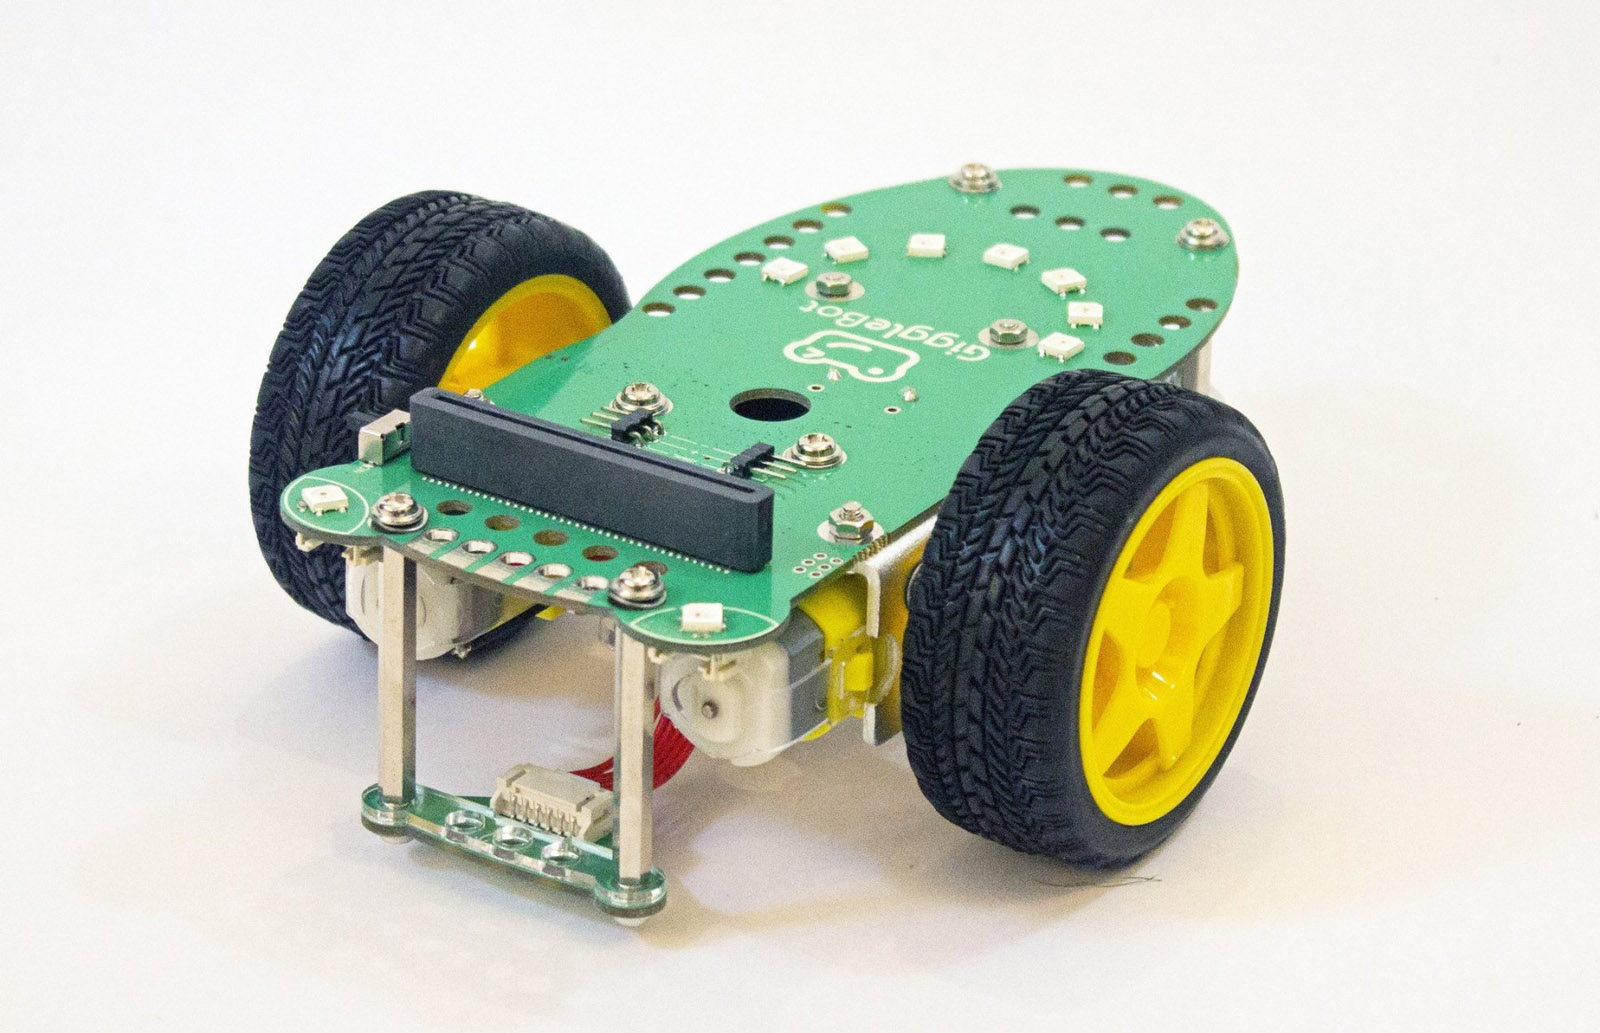 Kit de Robot GiggleBot para Aulas - Haga Clic para Ampliar